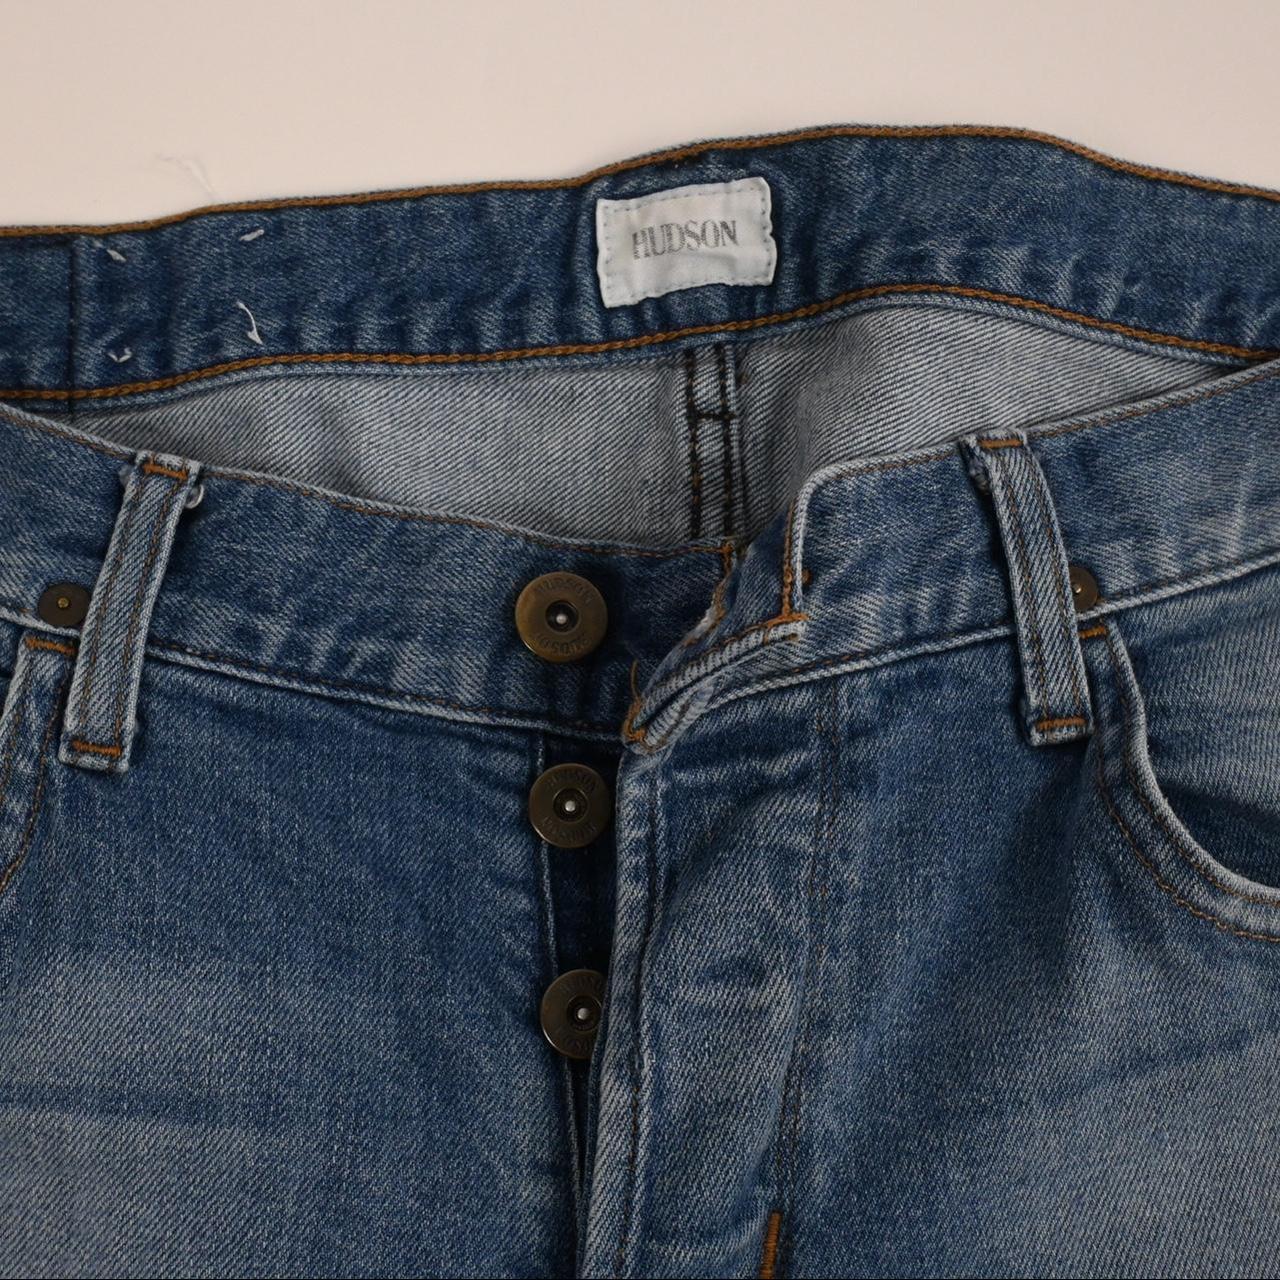 Hudson Jeans Men's Jeans (3)